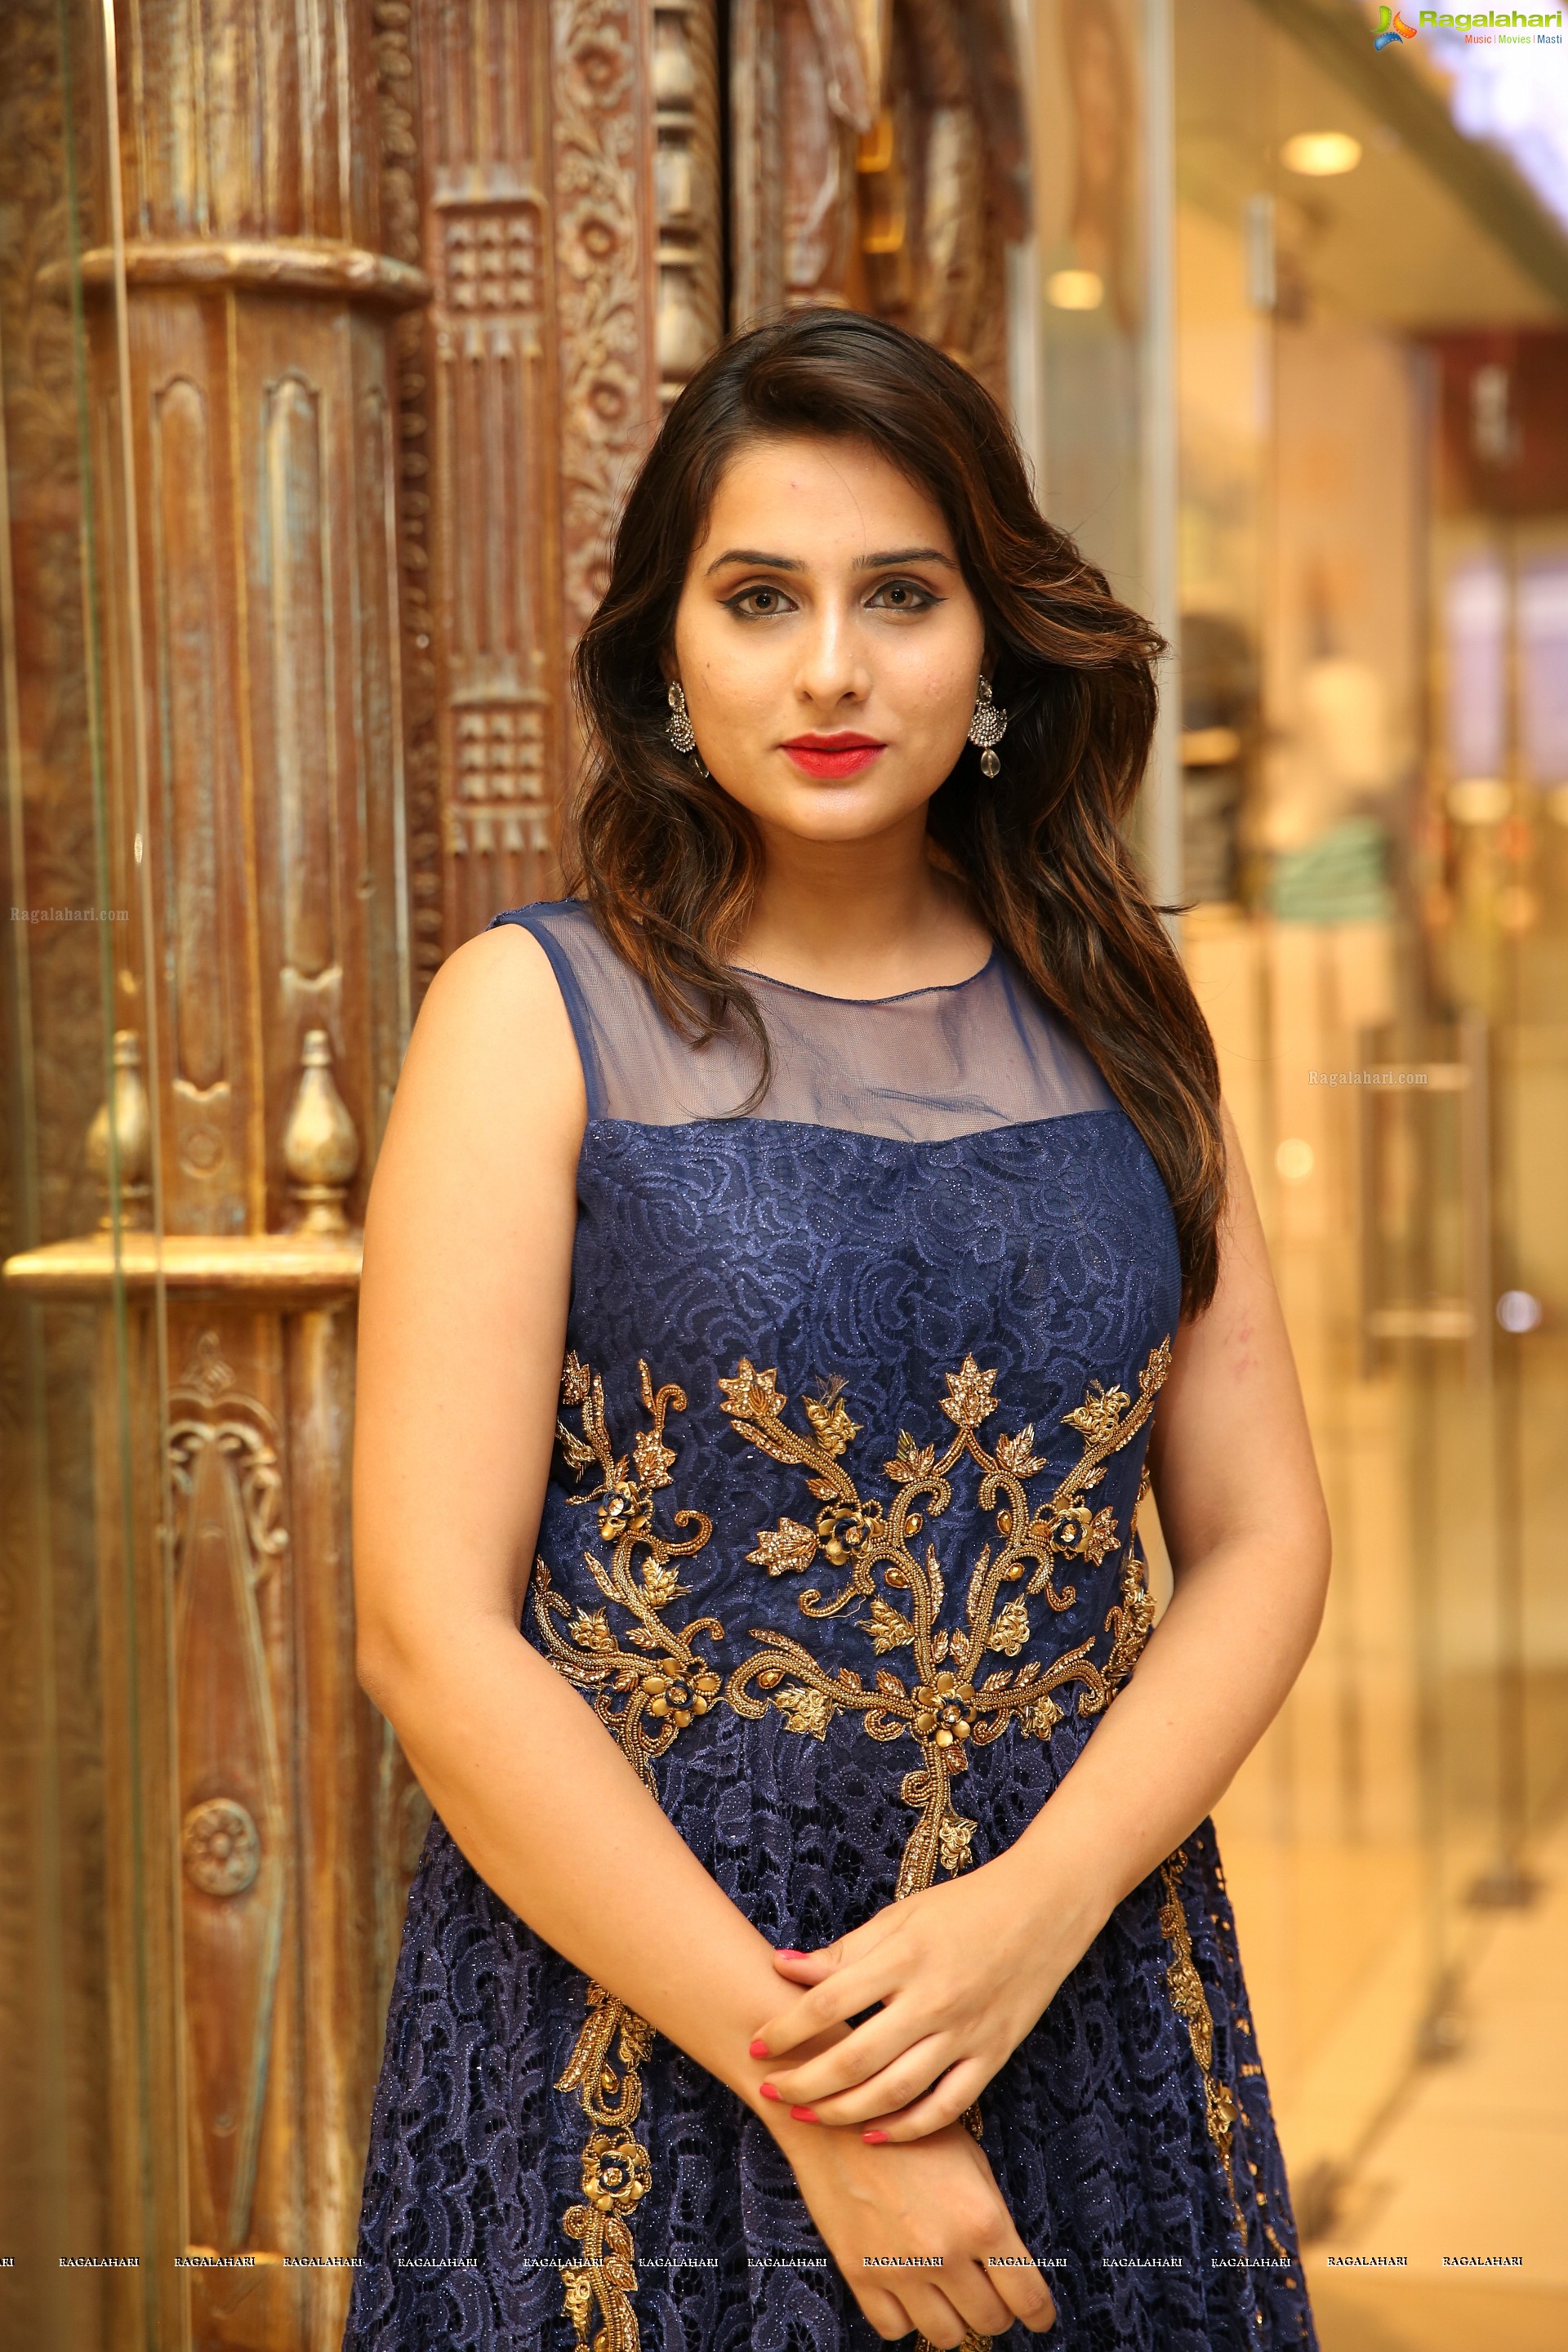 Nikitha Chaturvedi at Kashish Designer Fashion Luxury Showroom (High Definition)